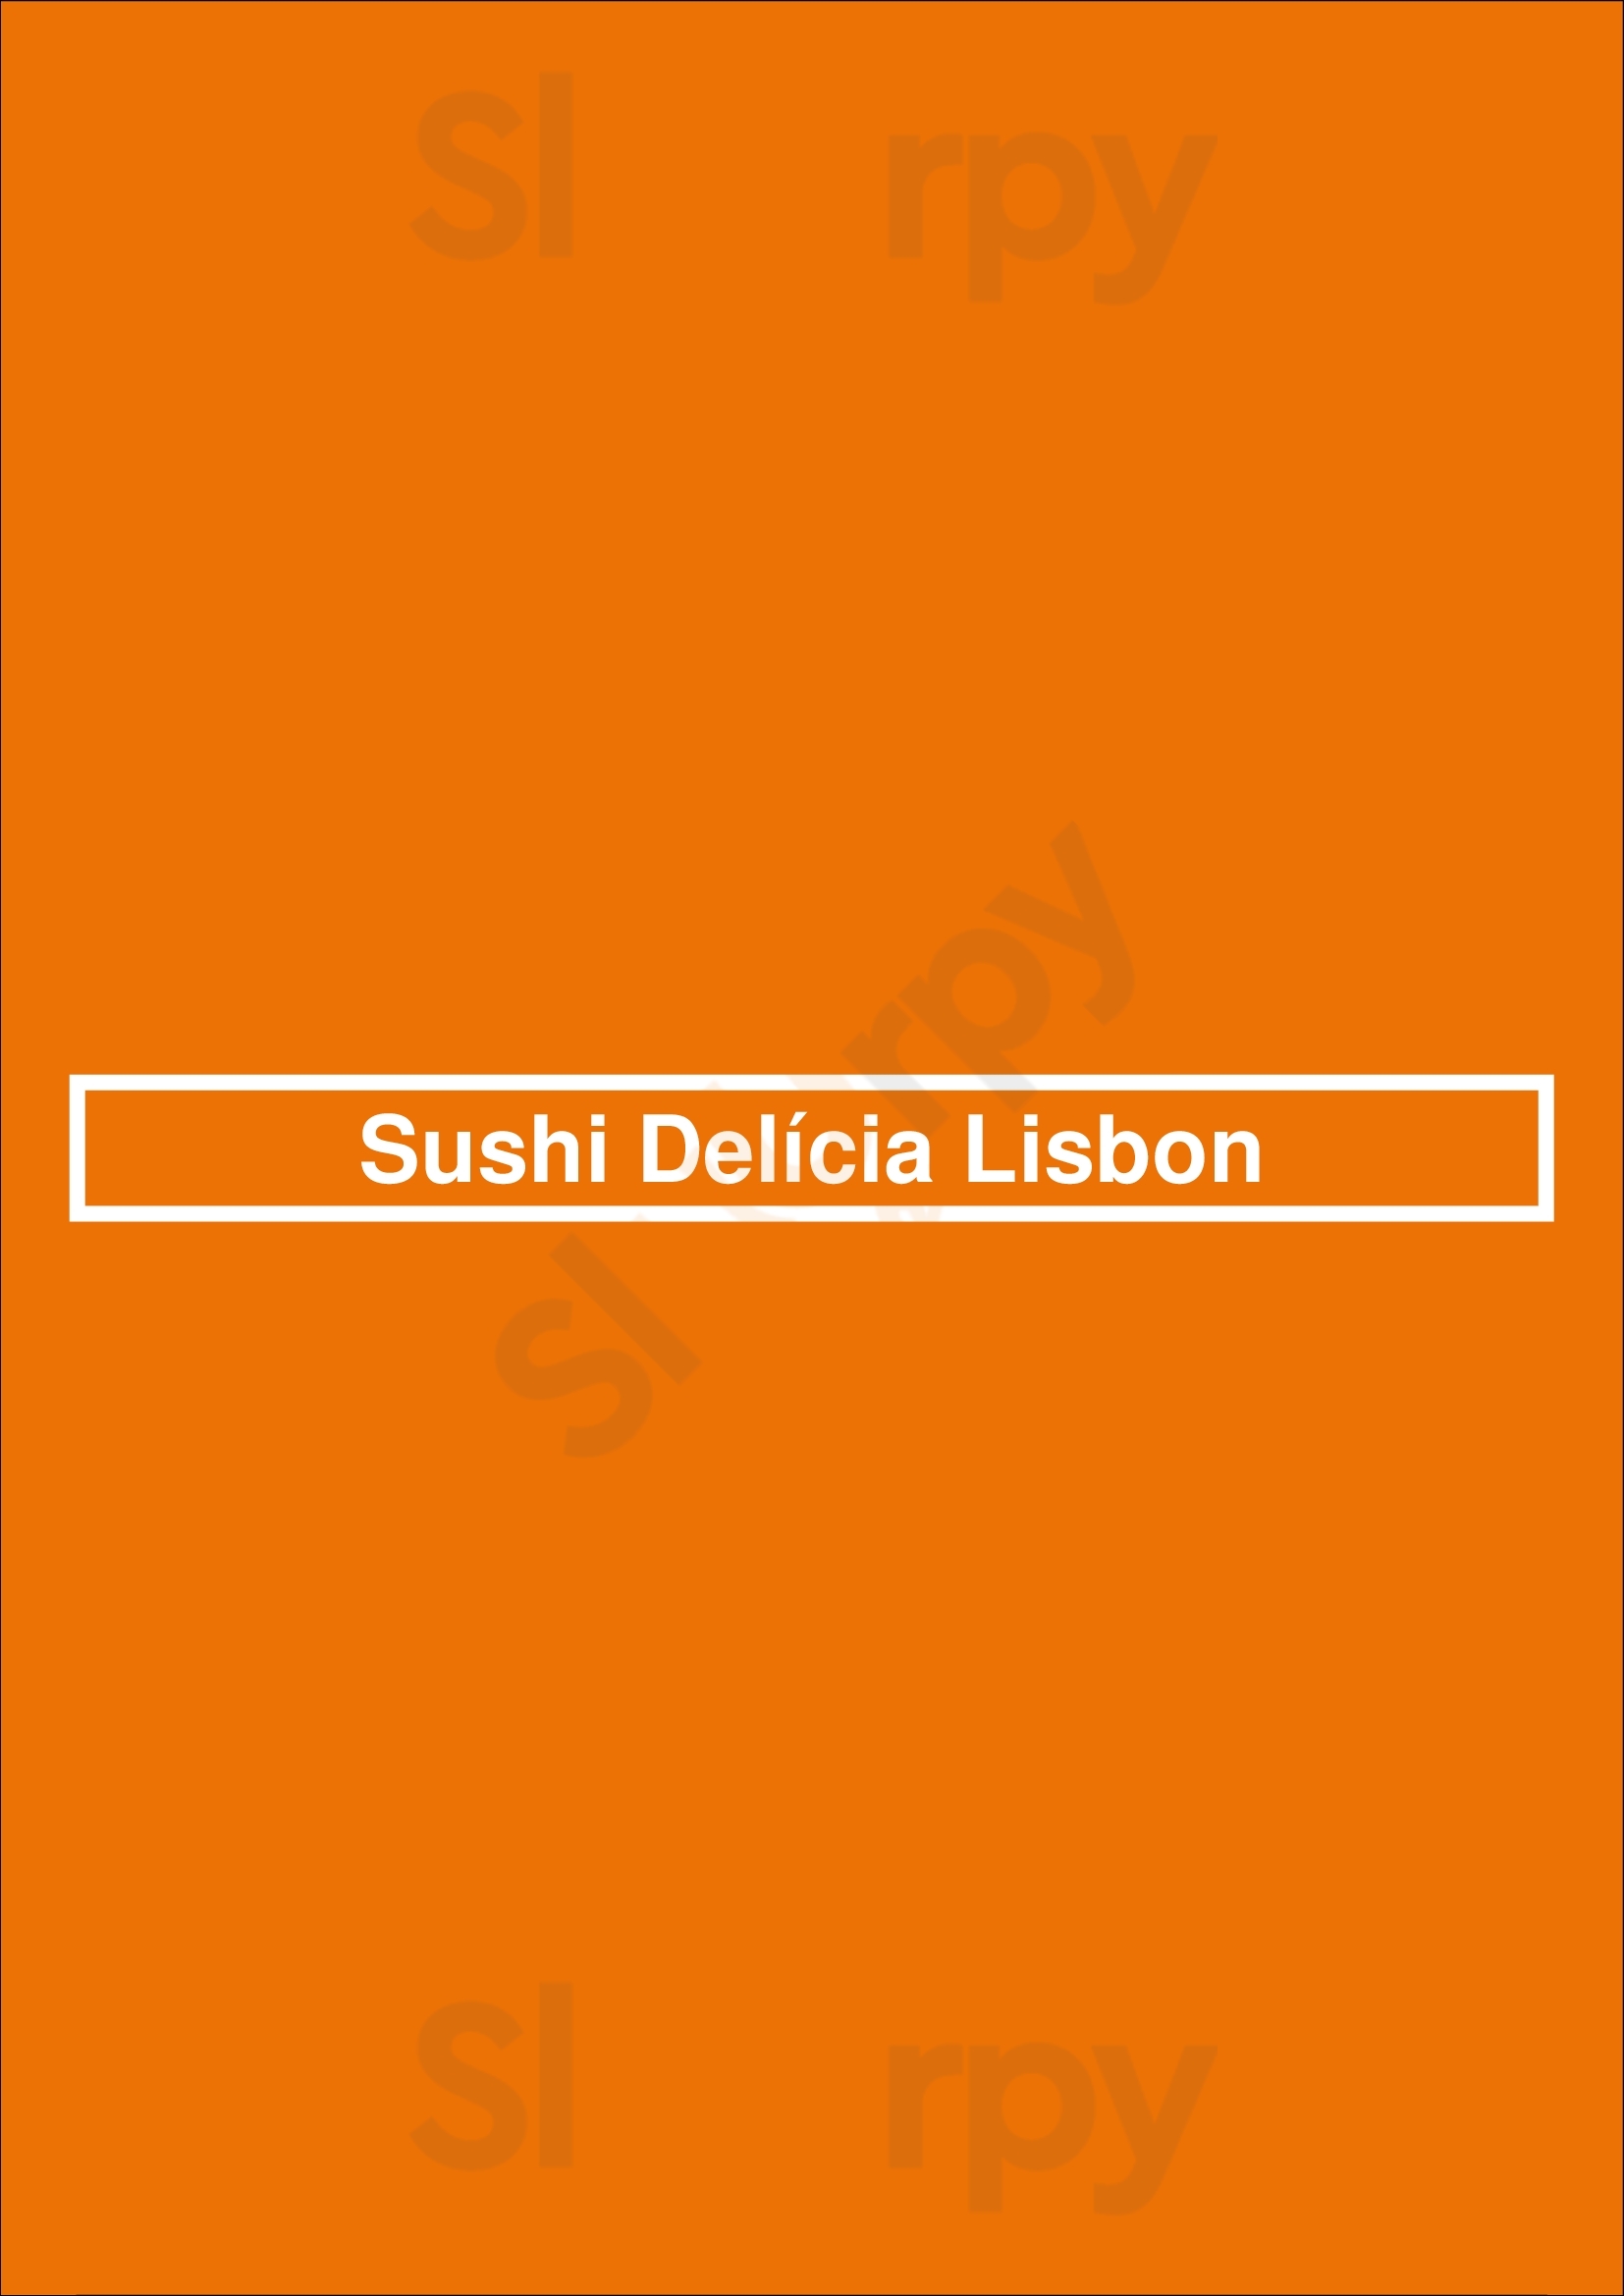 Sushi Delícia Lisbon Lisboa Menu - 1